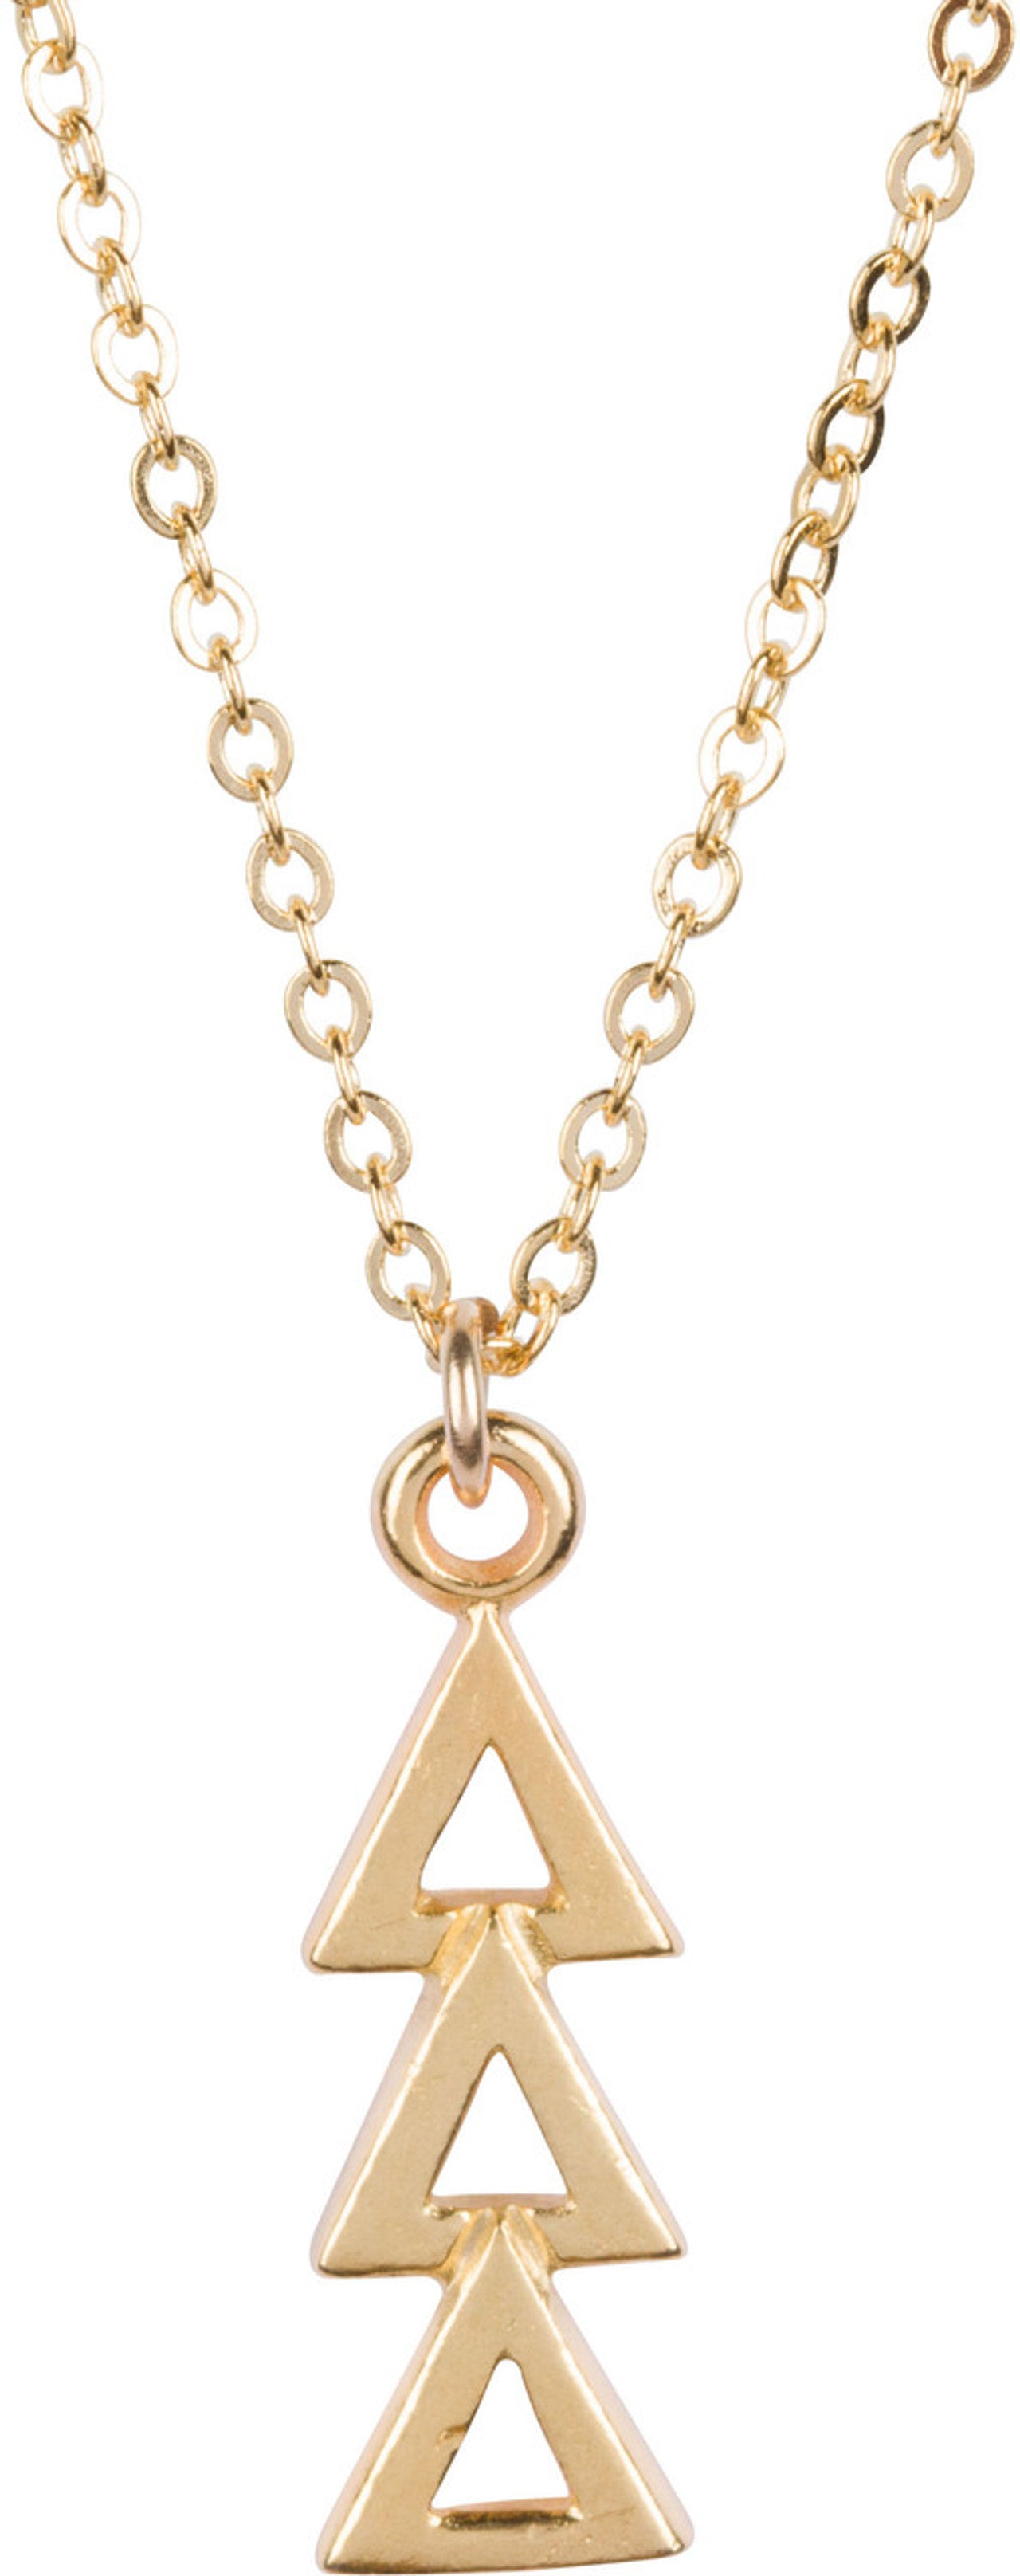 Delta Delta Delta Lavalier Necklace - Gold Plated - Go Greek Chic